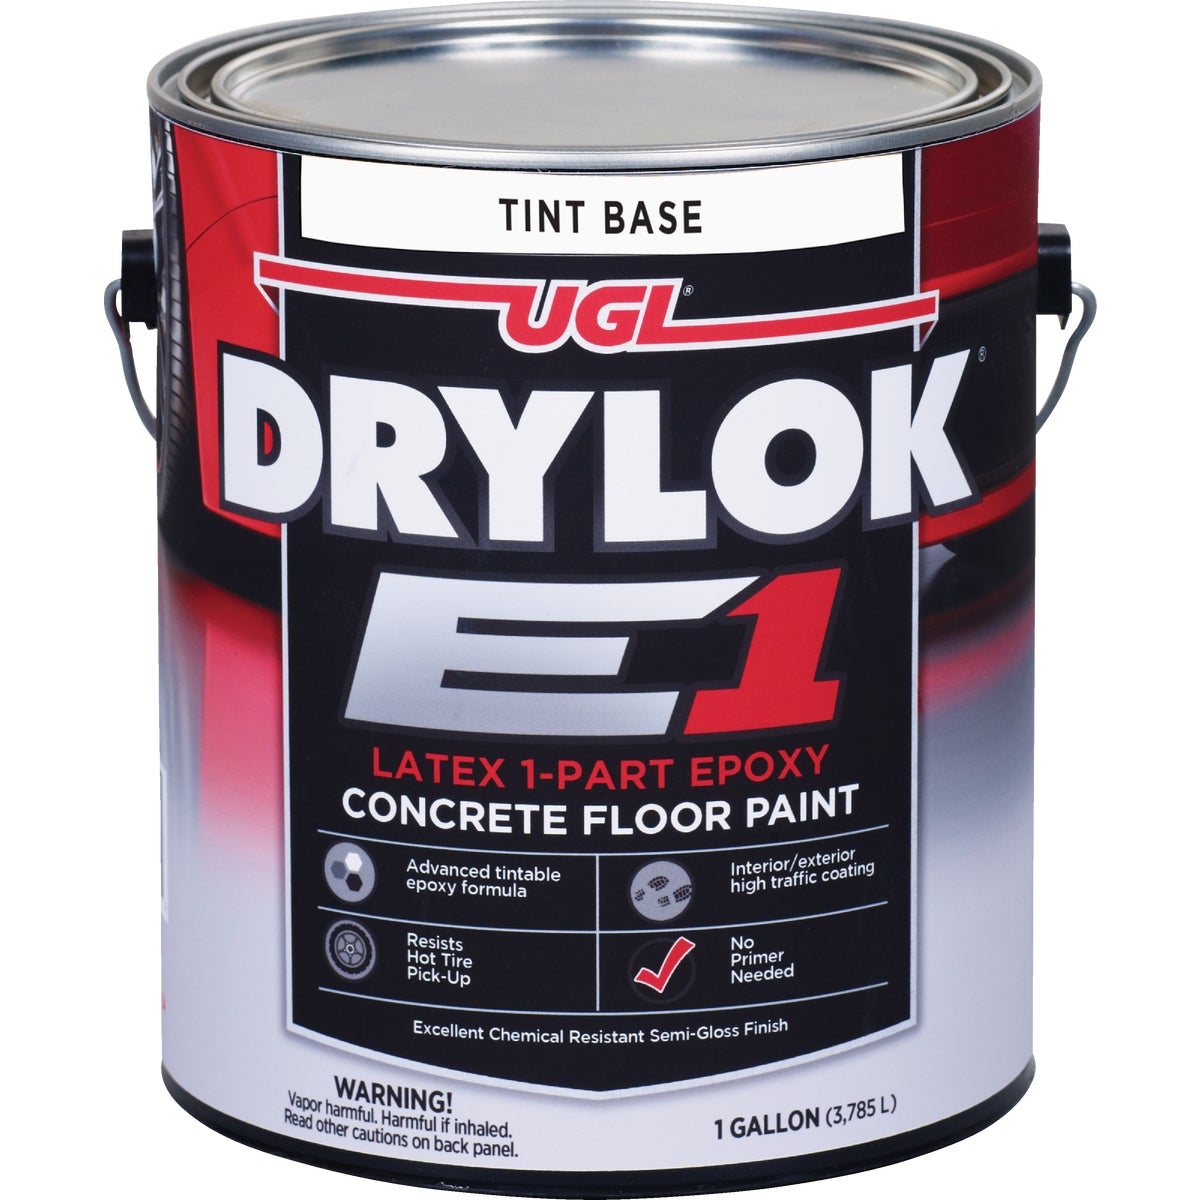 DRYLOK E1 One-Part Epoxy Concrete Floor Paint Tint, 1 Gal.